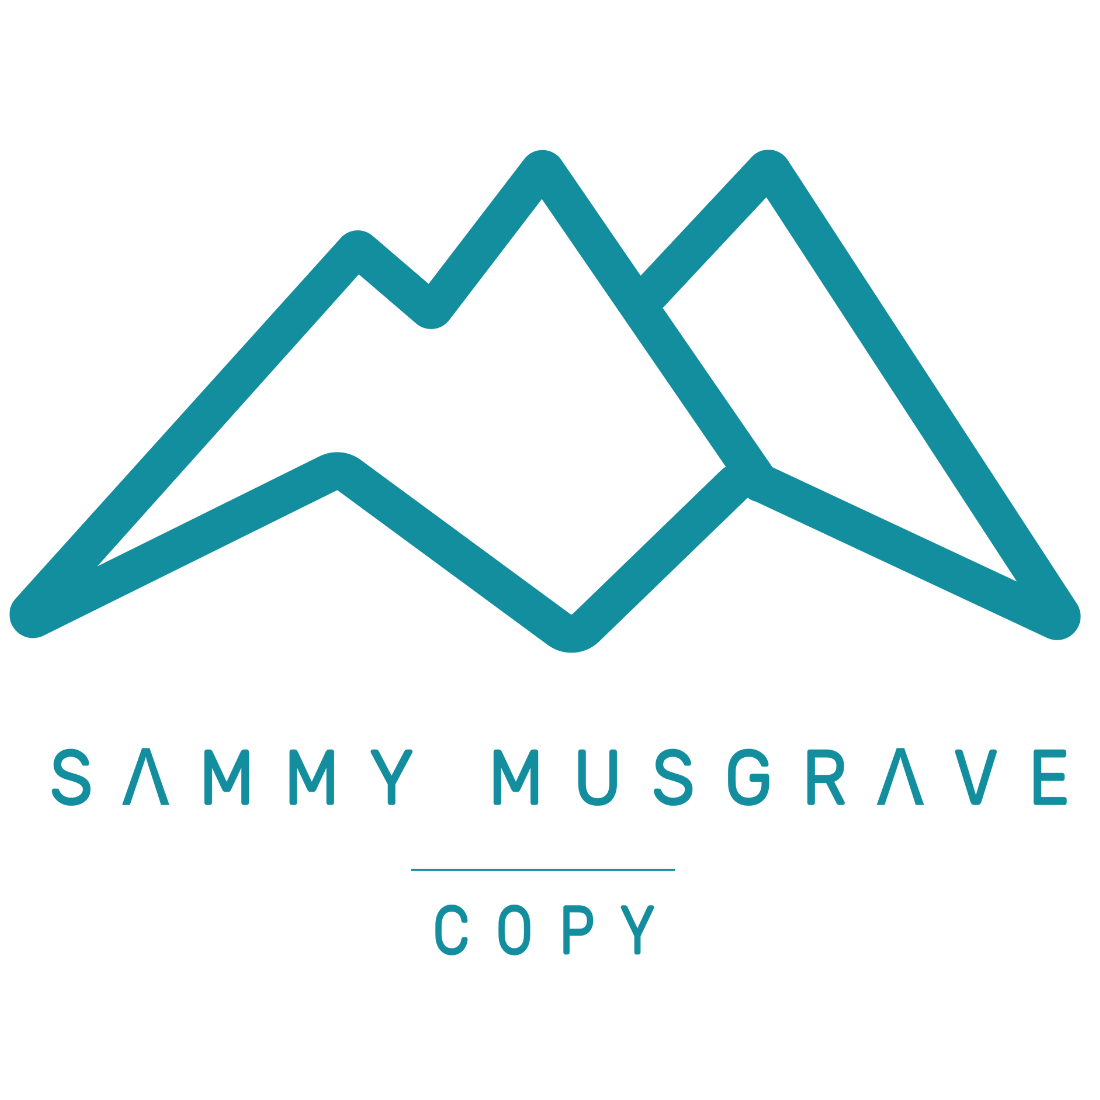 Sammy Musgrave Copy